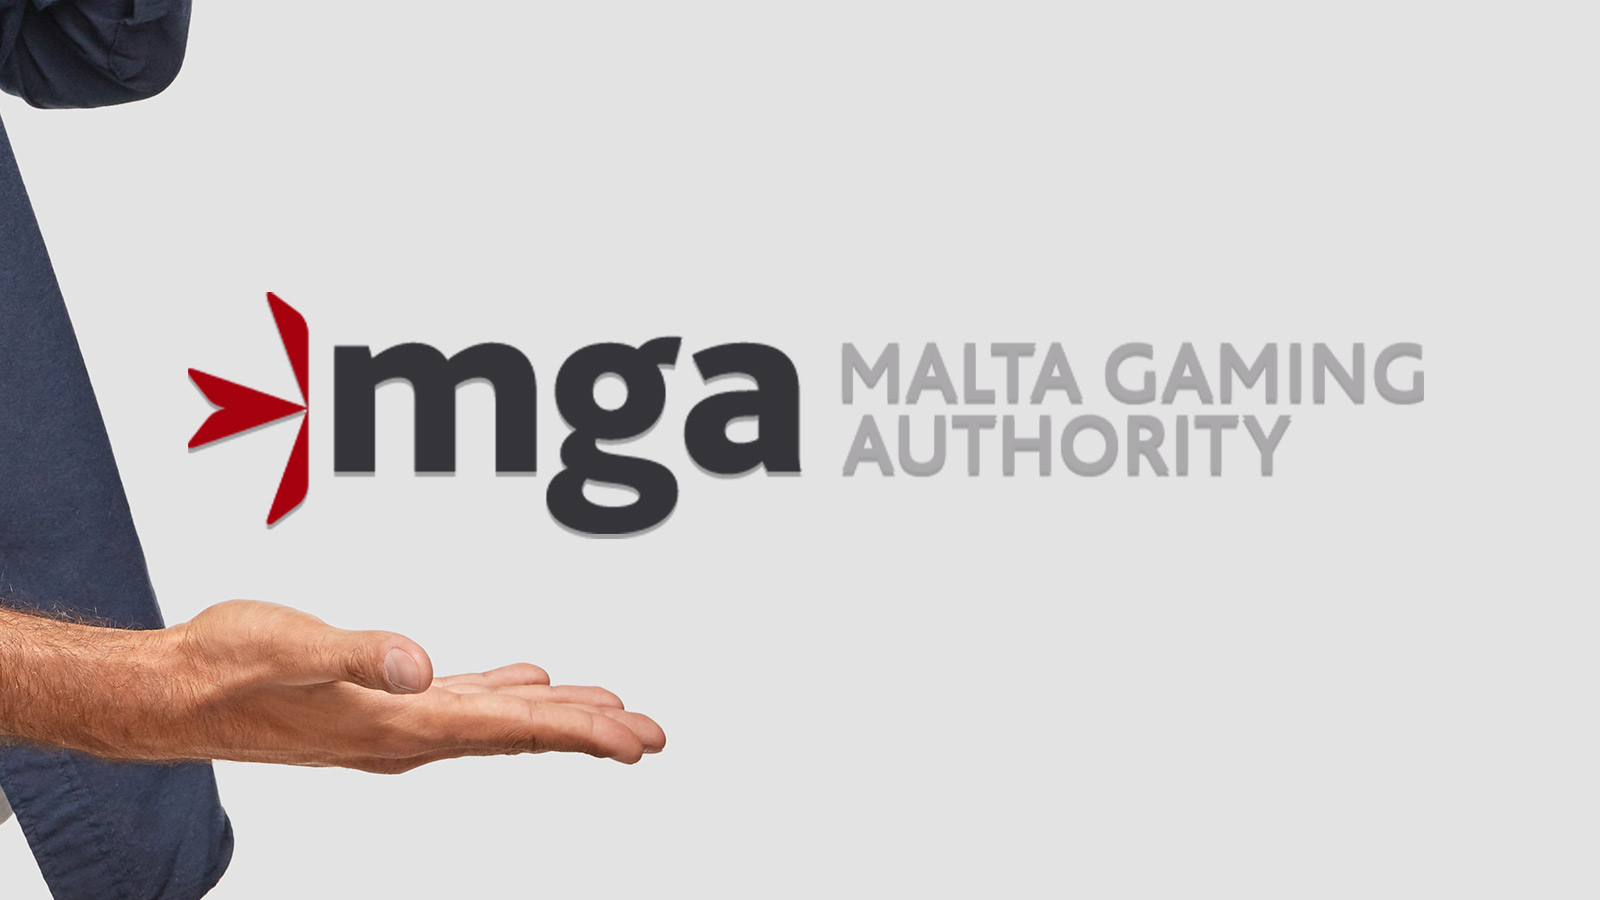 The Malta Gaming Authority in IrelanD